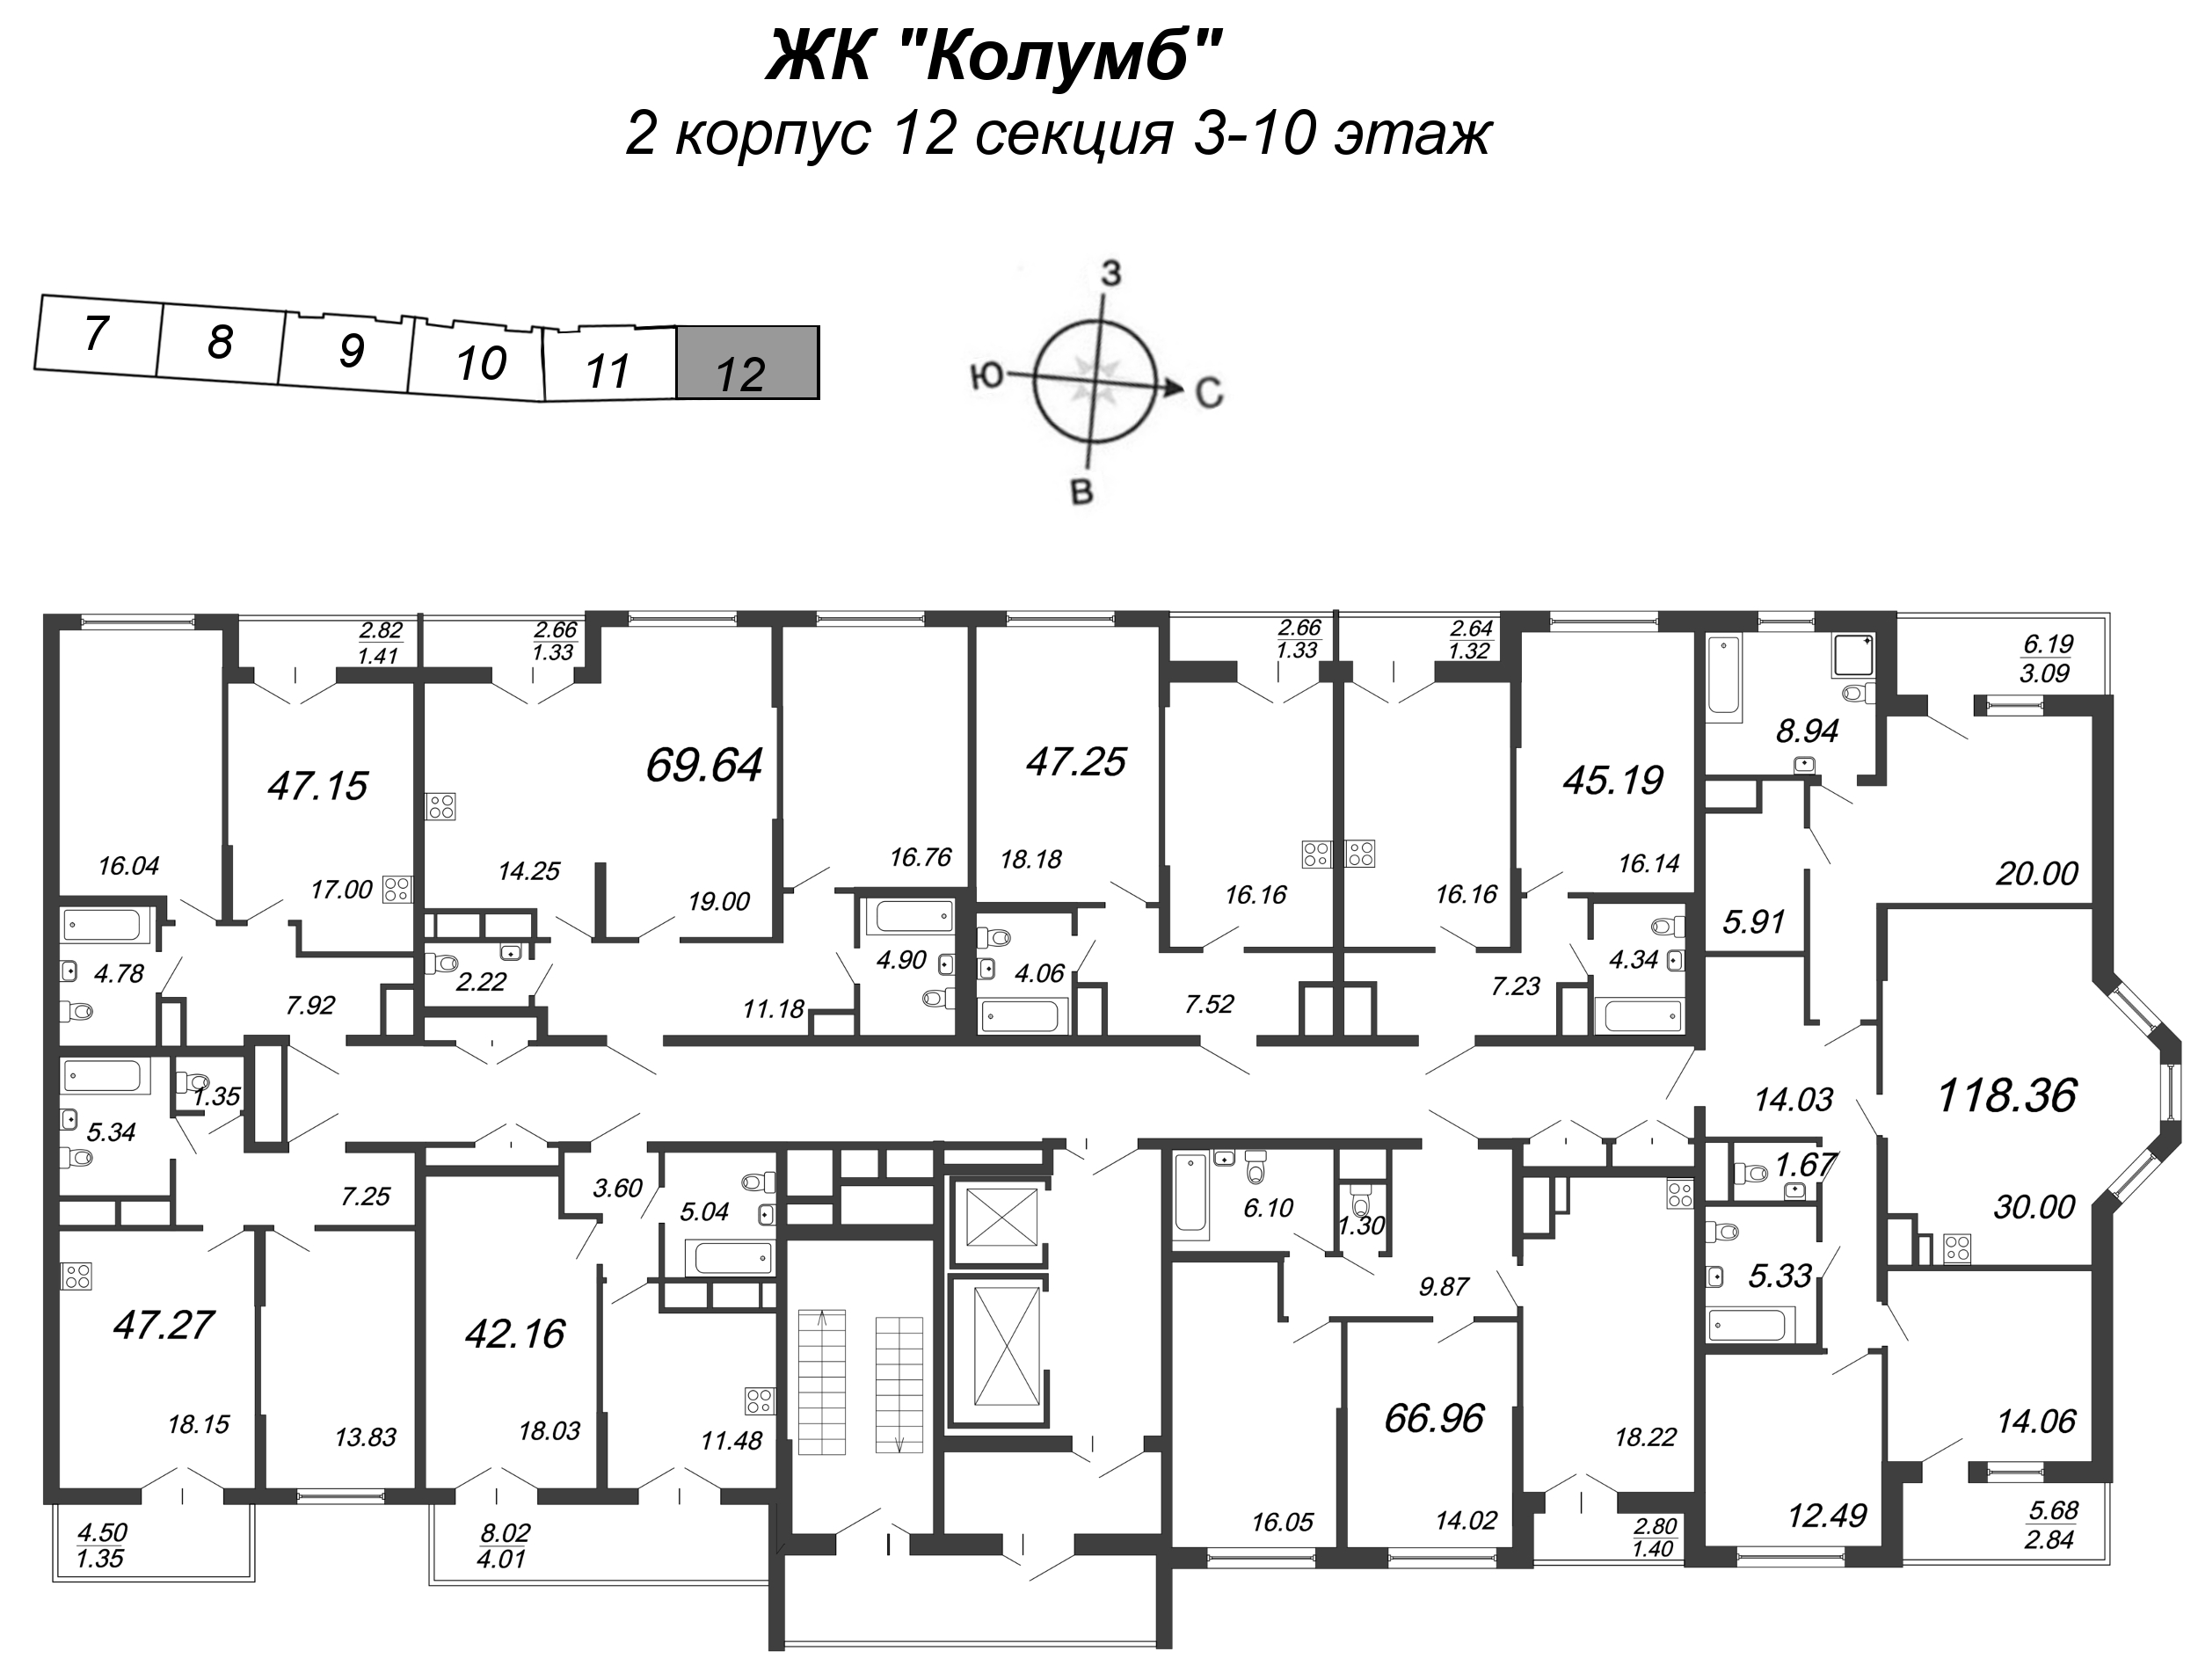 2-комнатная квартира, 70.4 м² в ЖК "Колумб" - планировка этажа